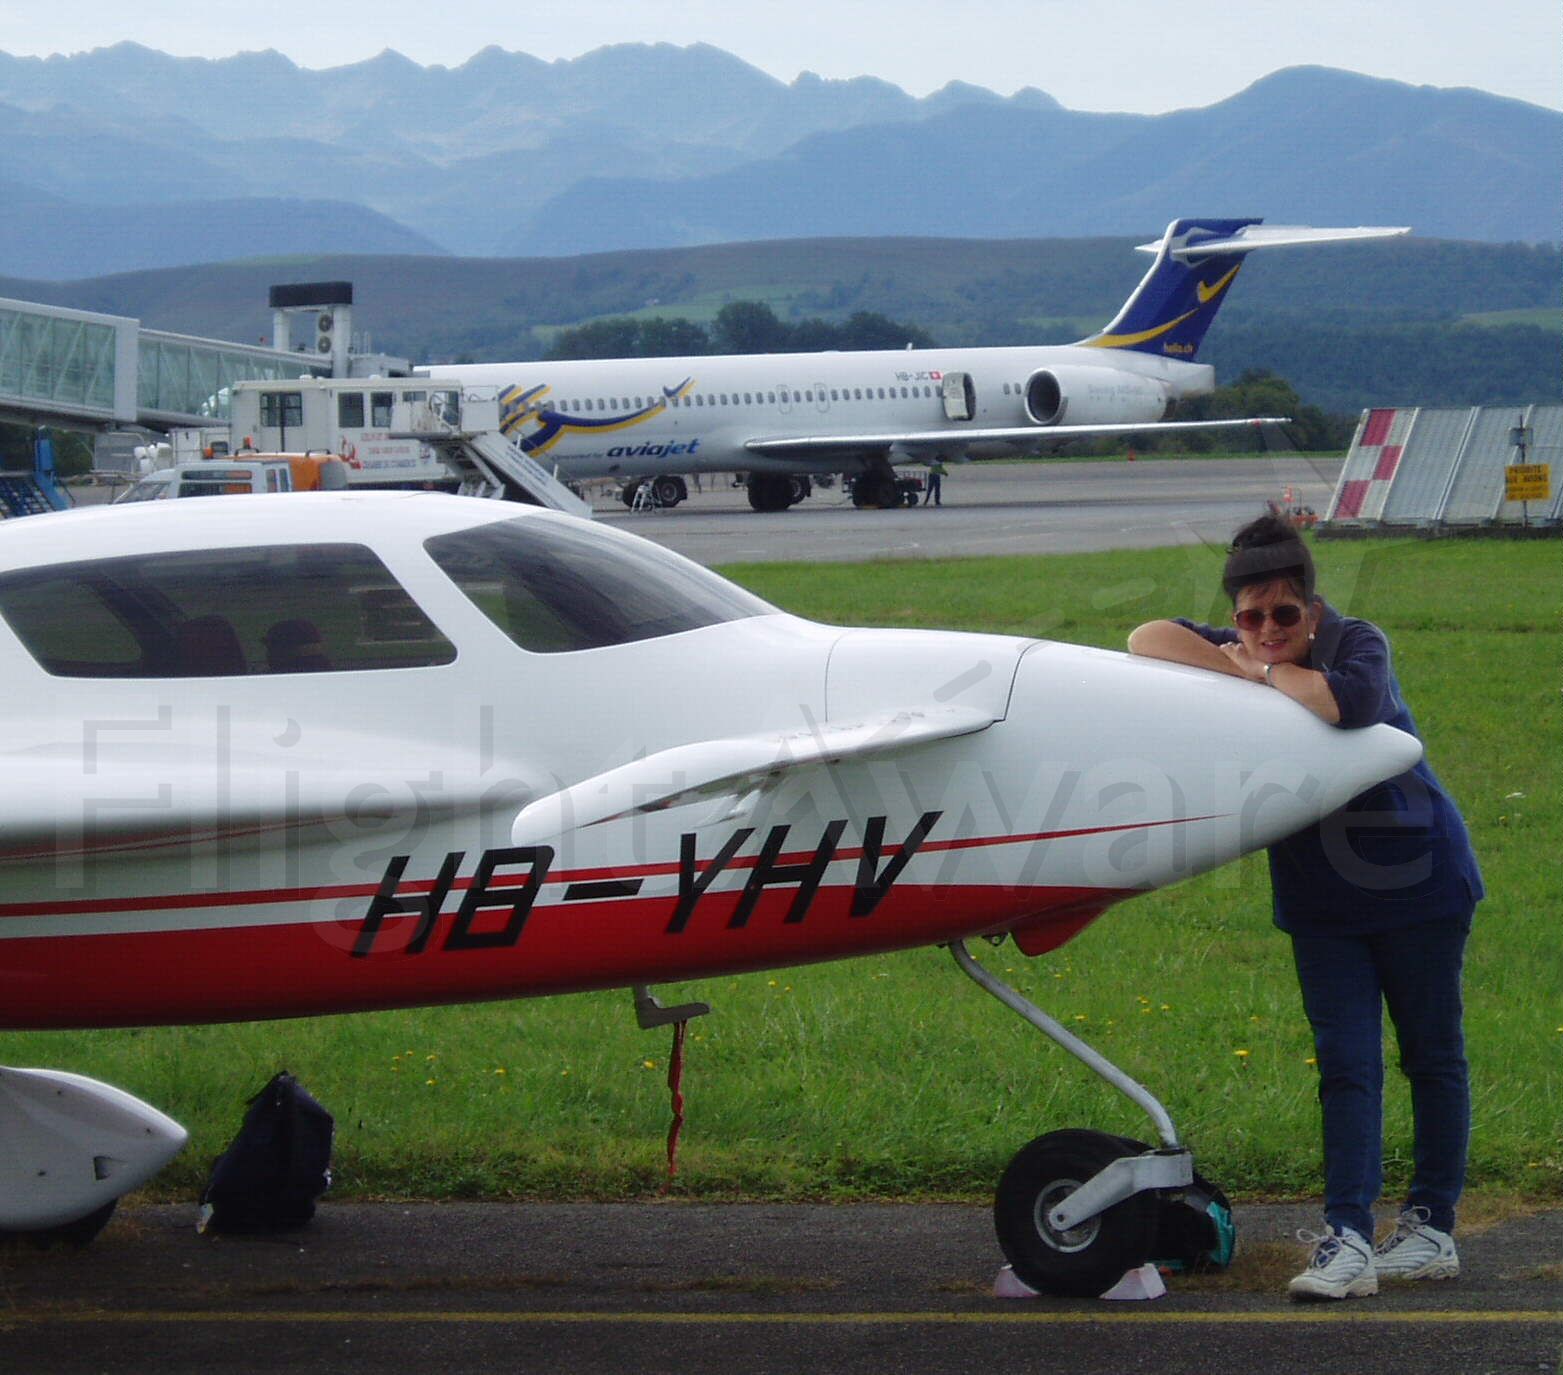 VELOCITY Velocity (HB-YHV) - After landing in Lourdes, France (LFBT)